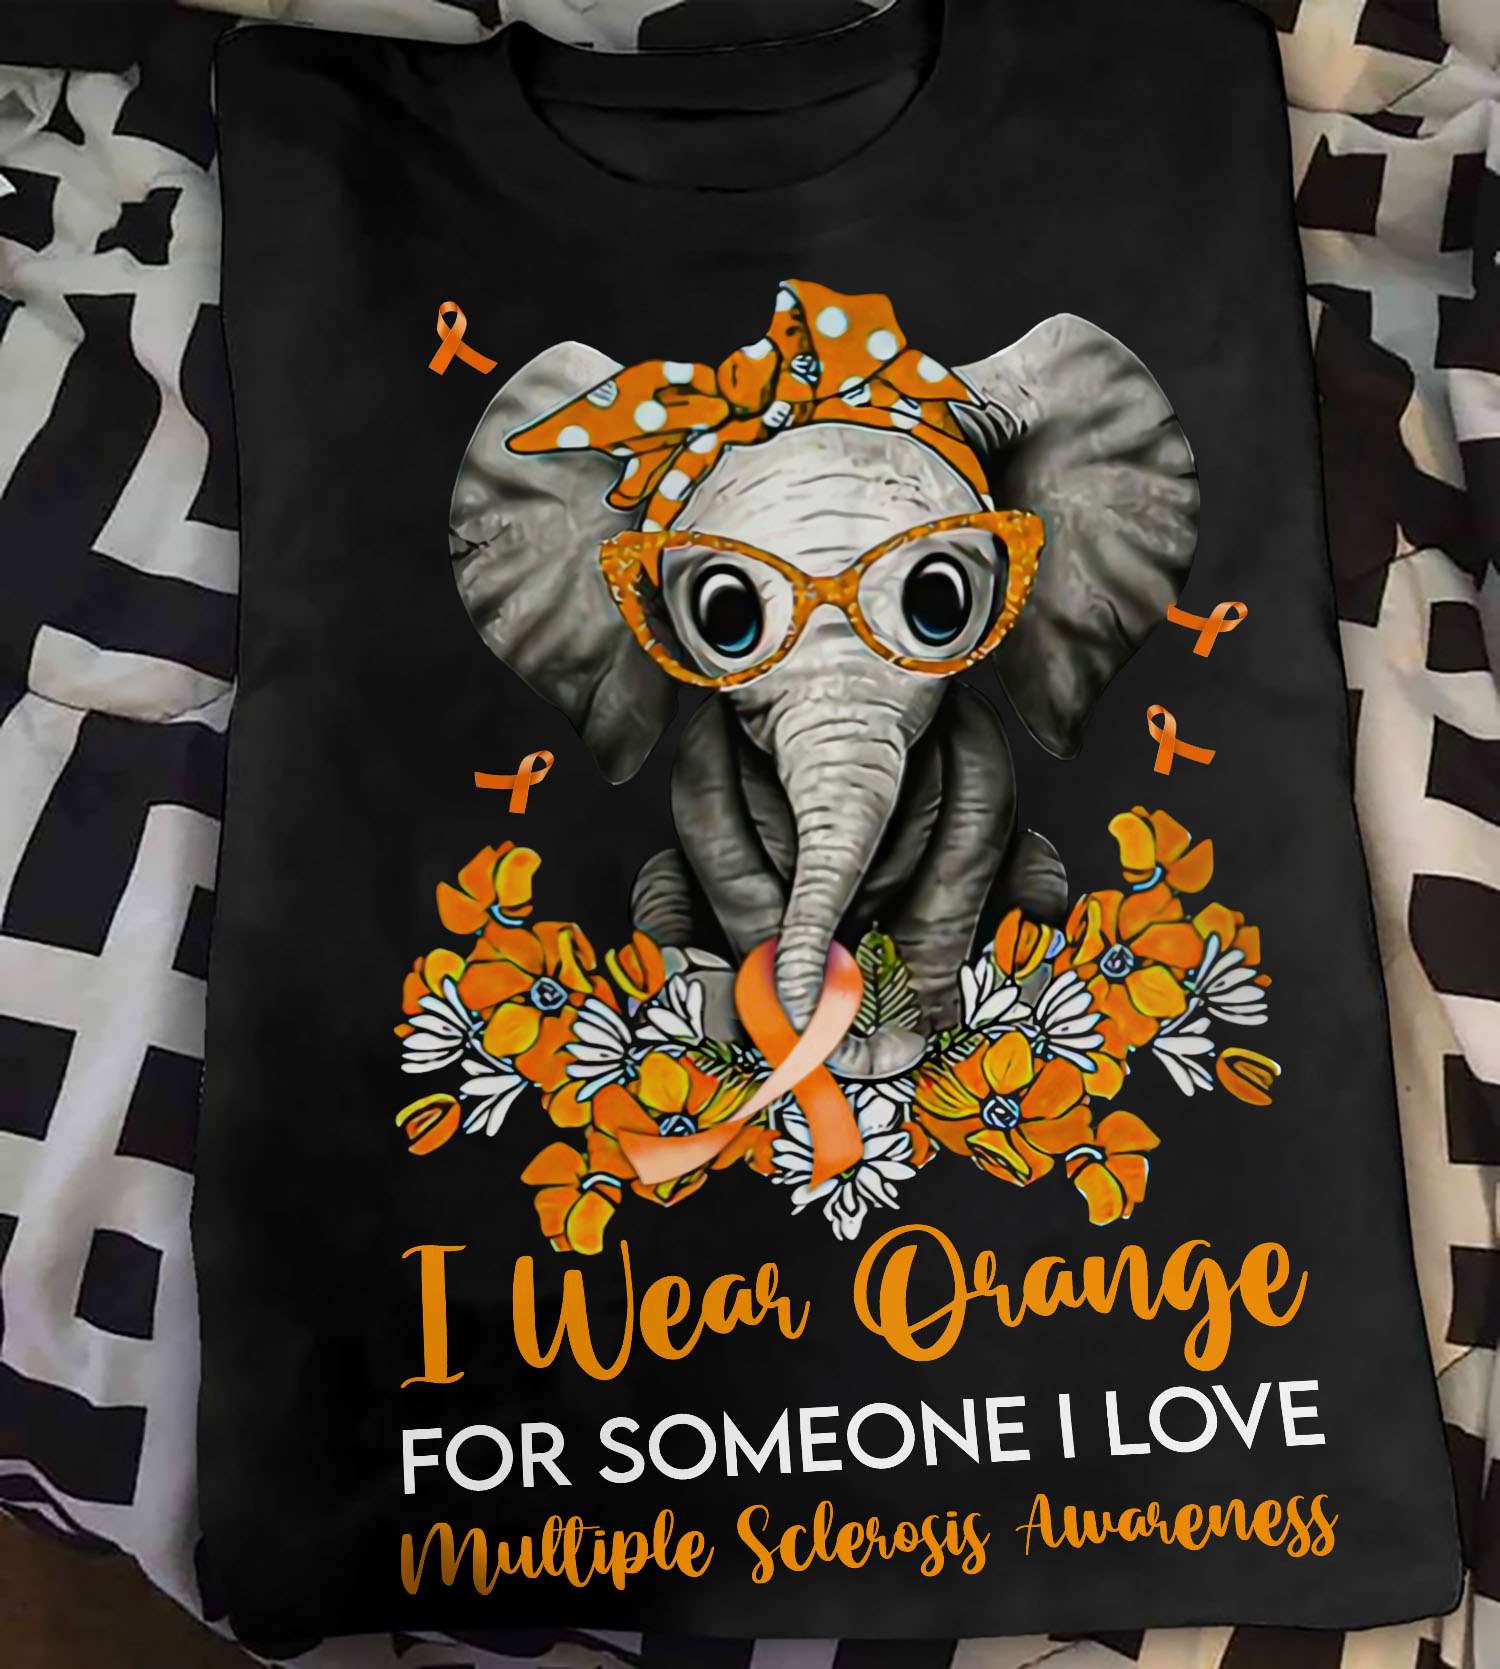 I wear orange for someone I love - Multiple sclerosis awareness, sclerosis awareness elephant